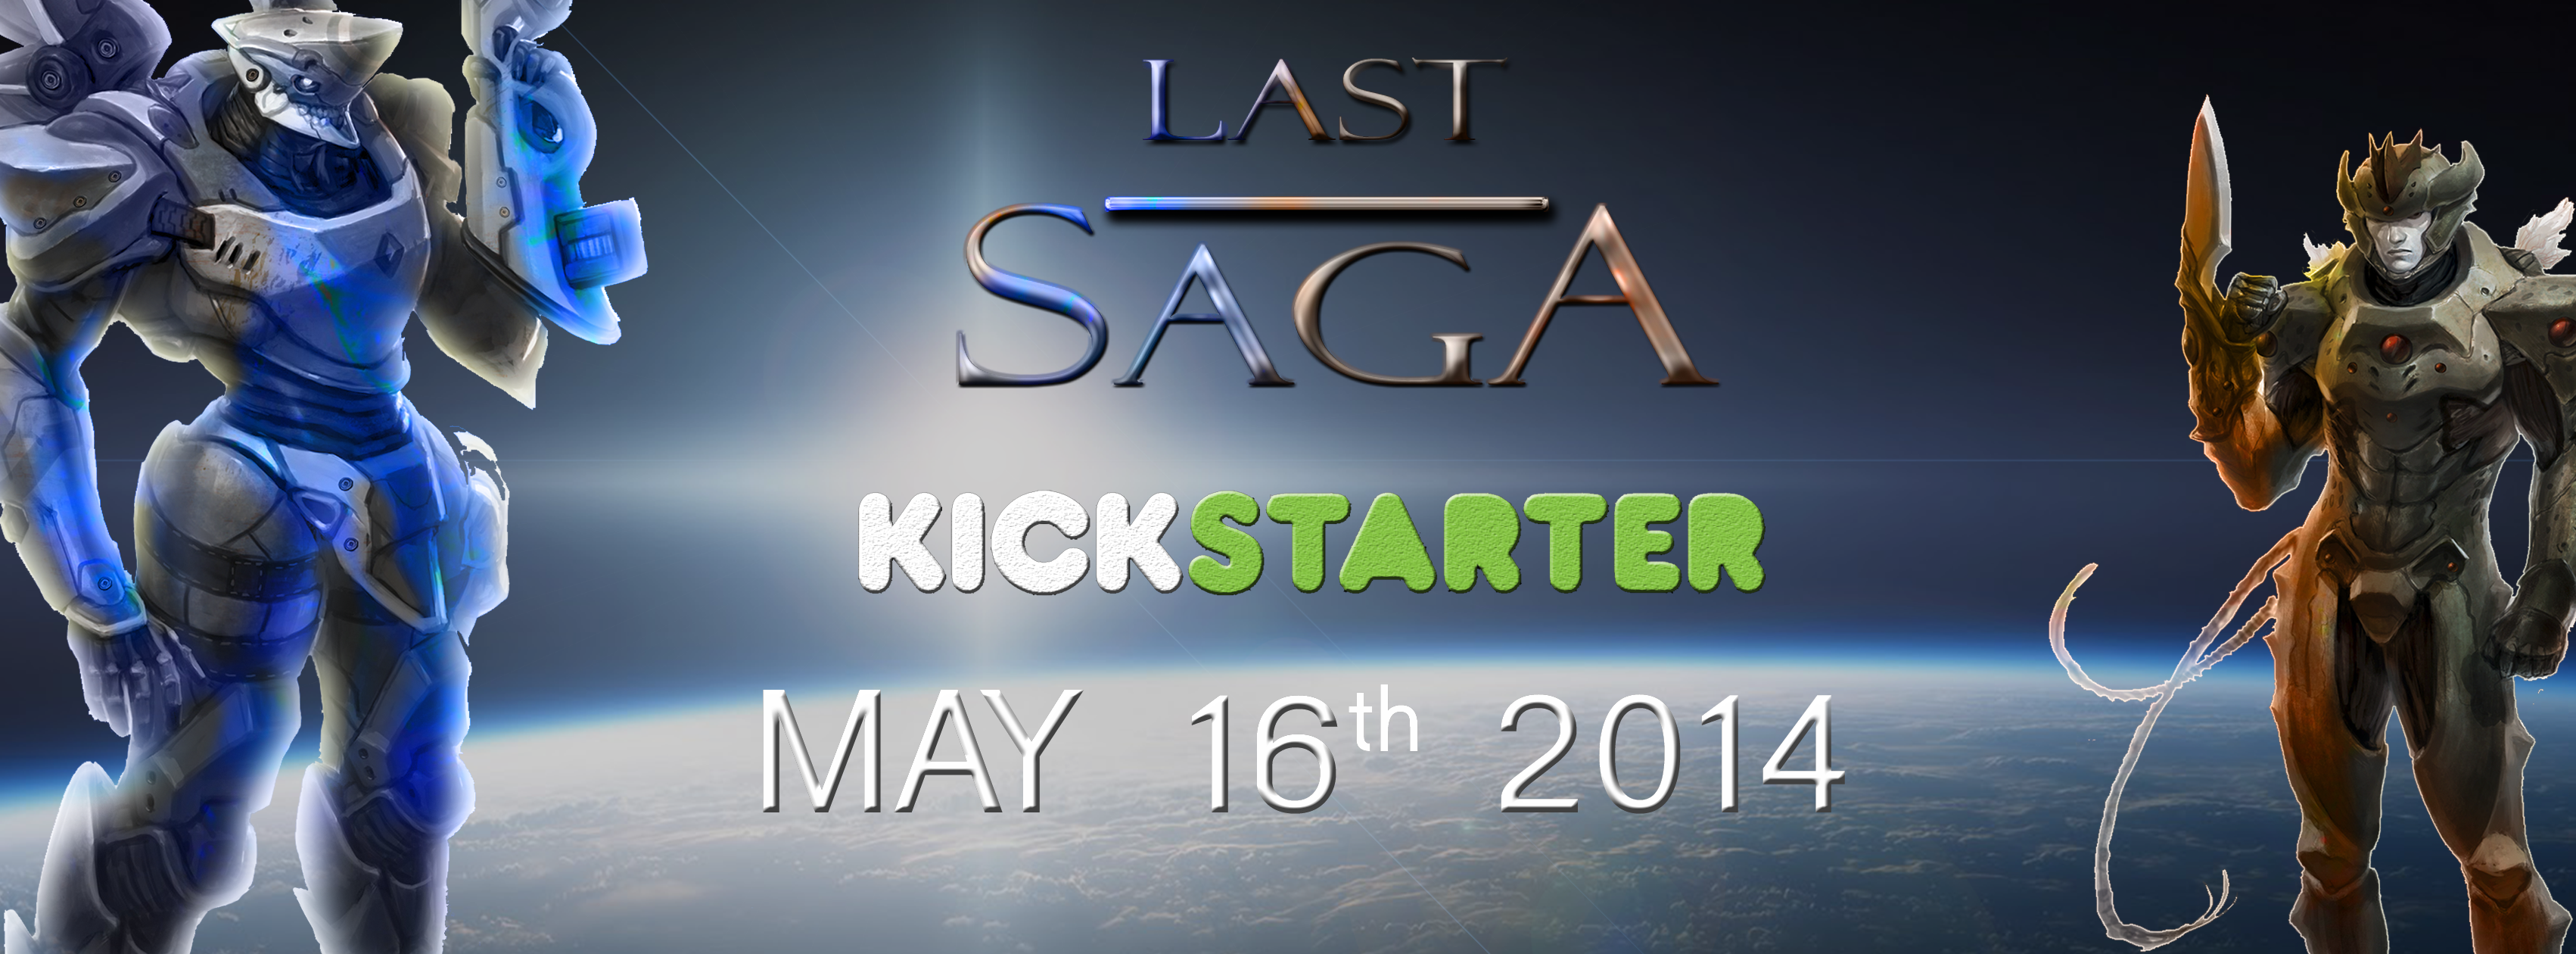 Last Saga kickstarter will go live Friday May 16th